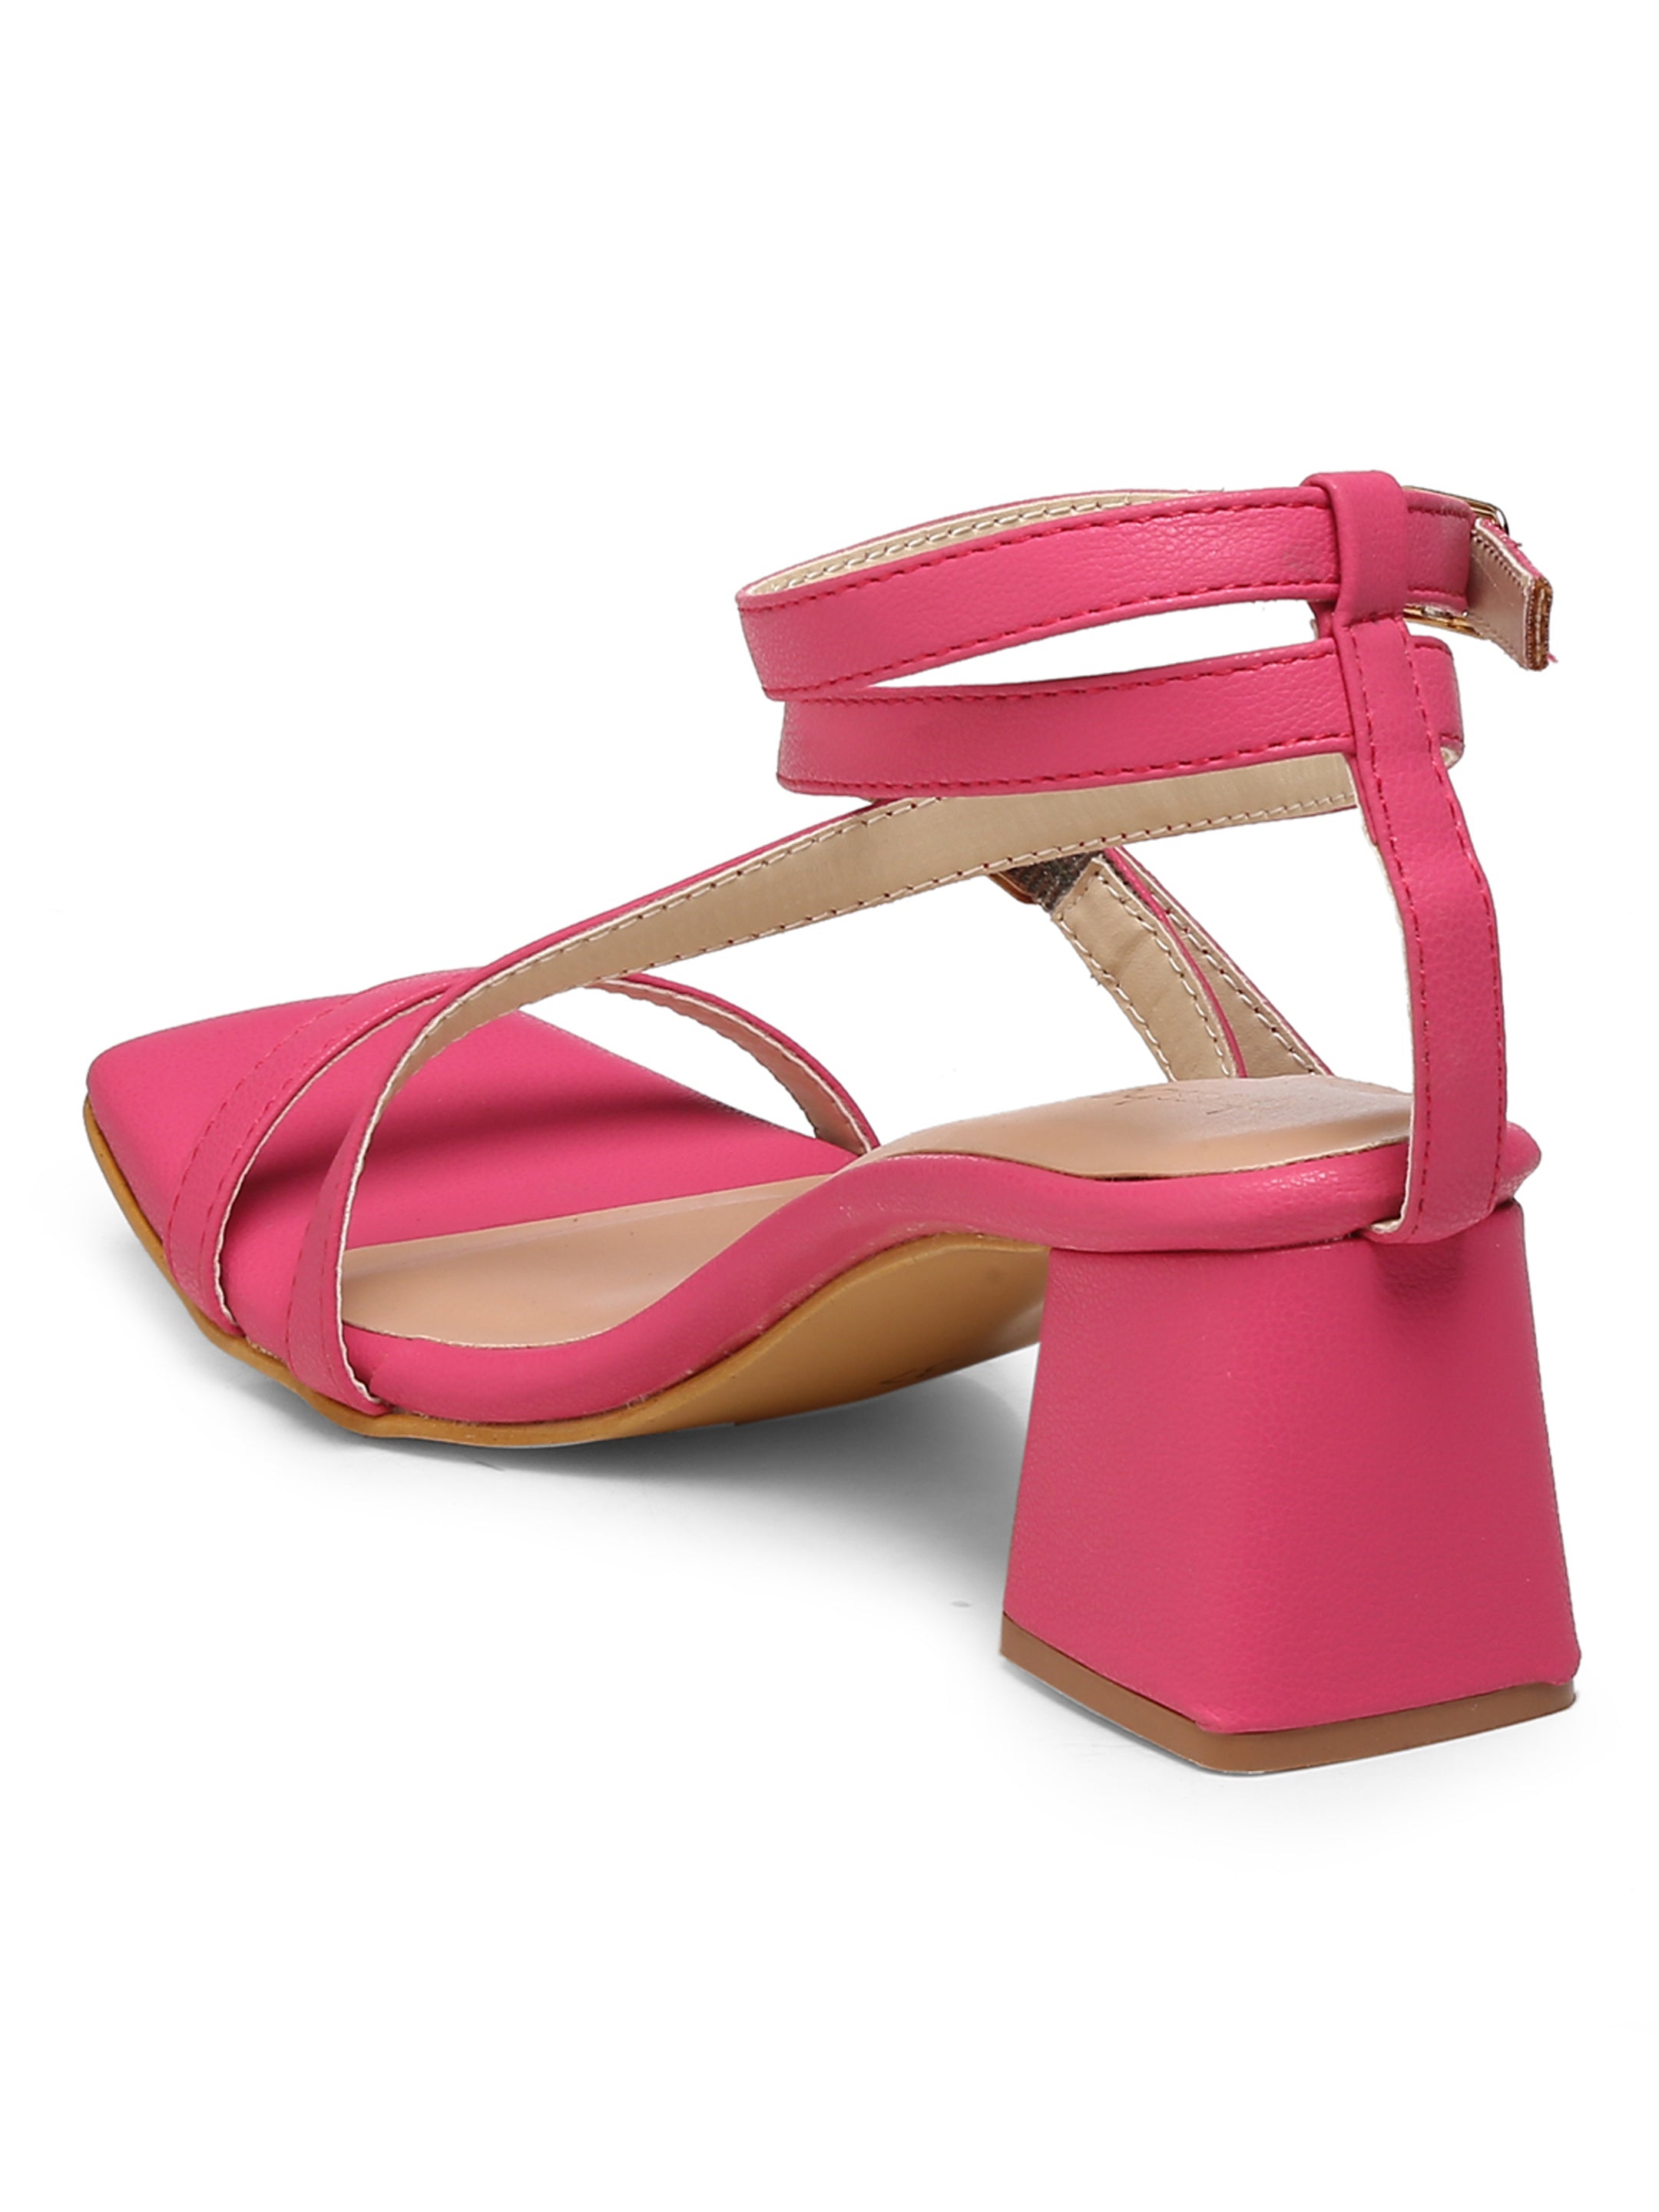 GNIST Pink Ankle Strap Block Heel